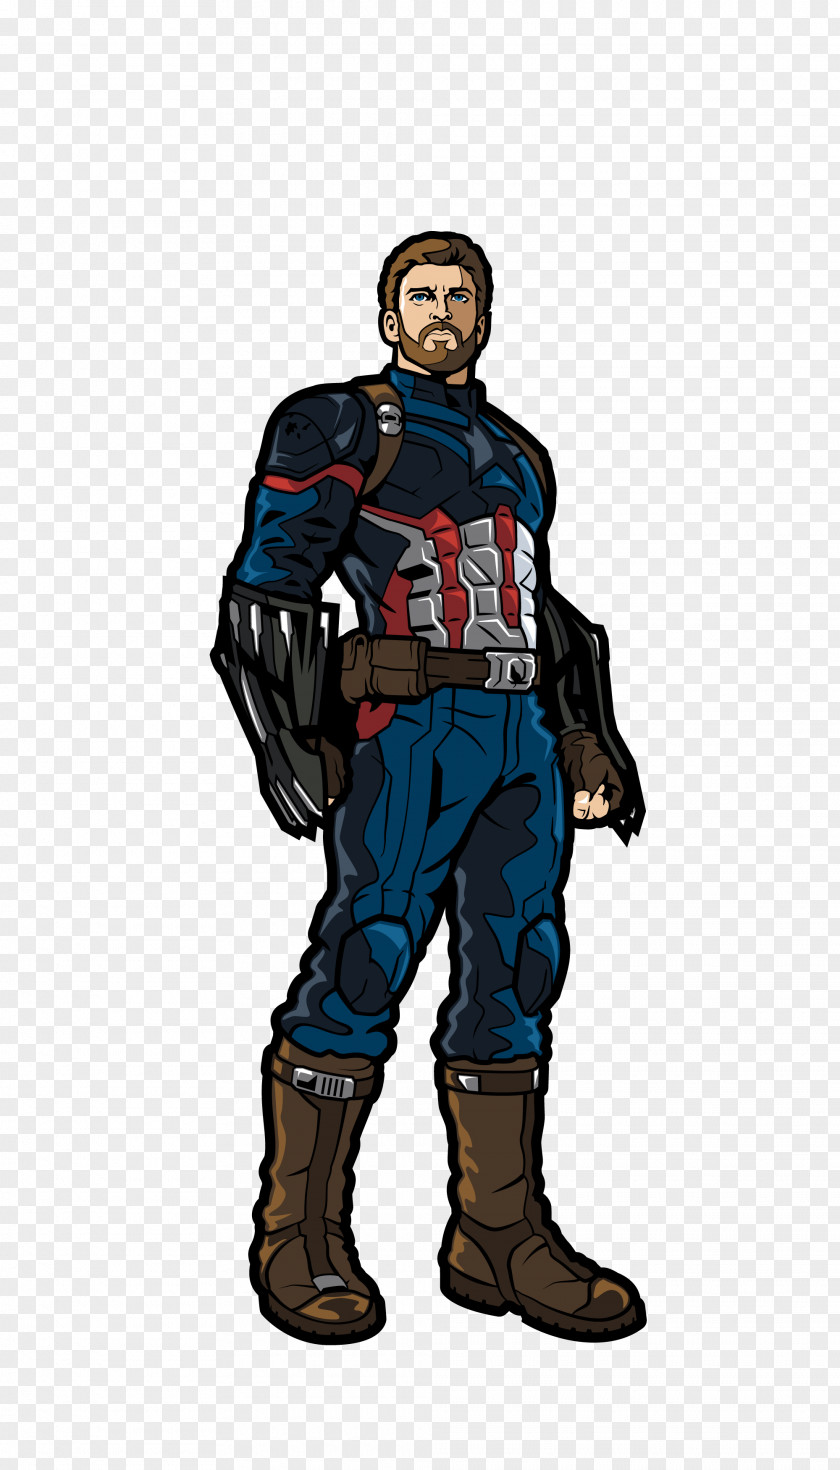 Captain America Gamora The Avengers Film Superhero Movie PNG